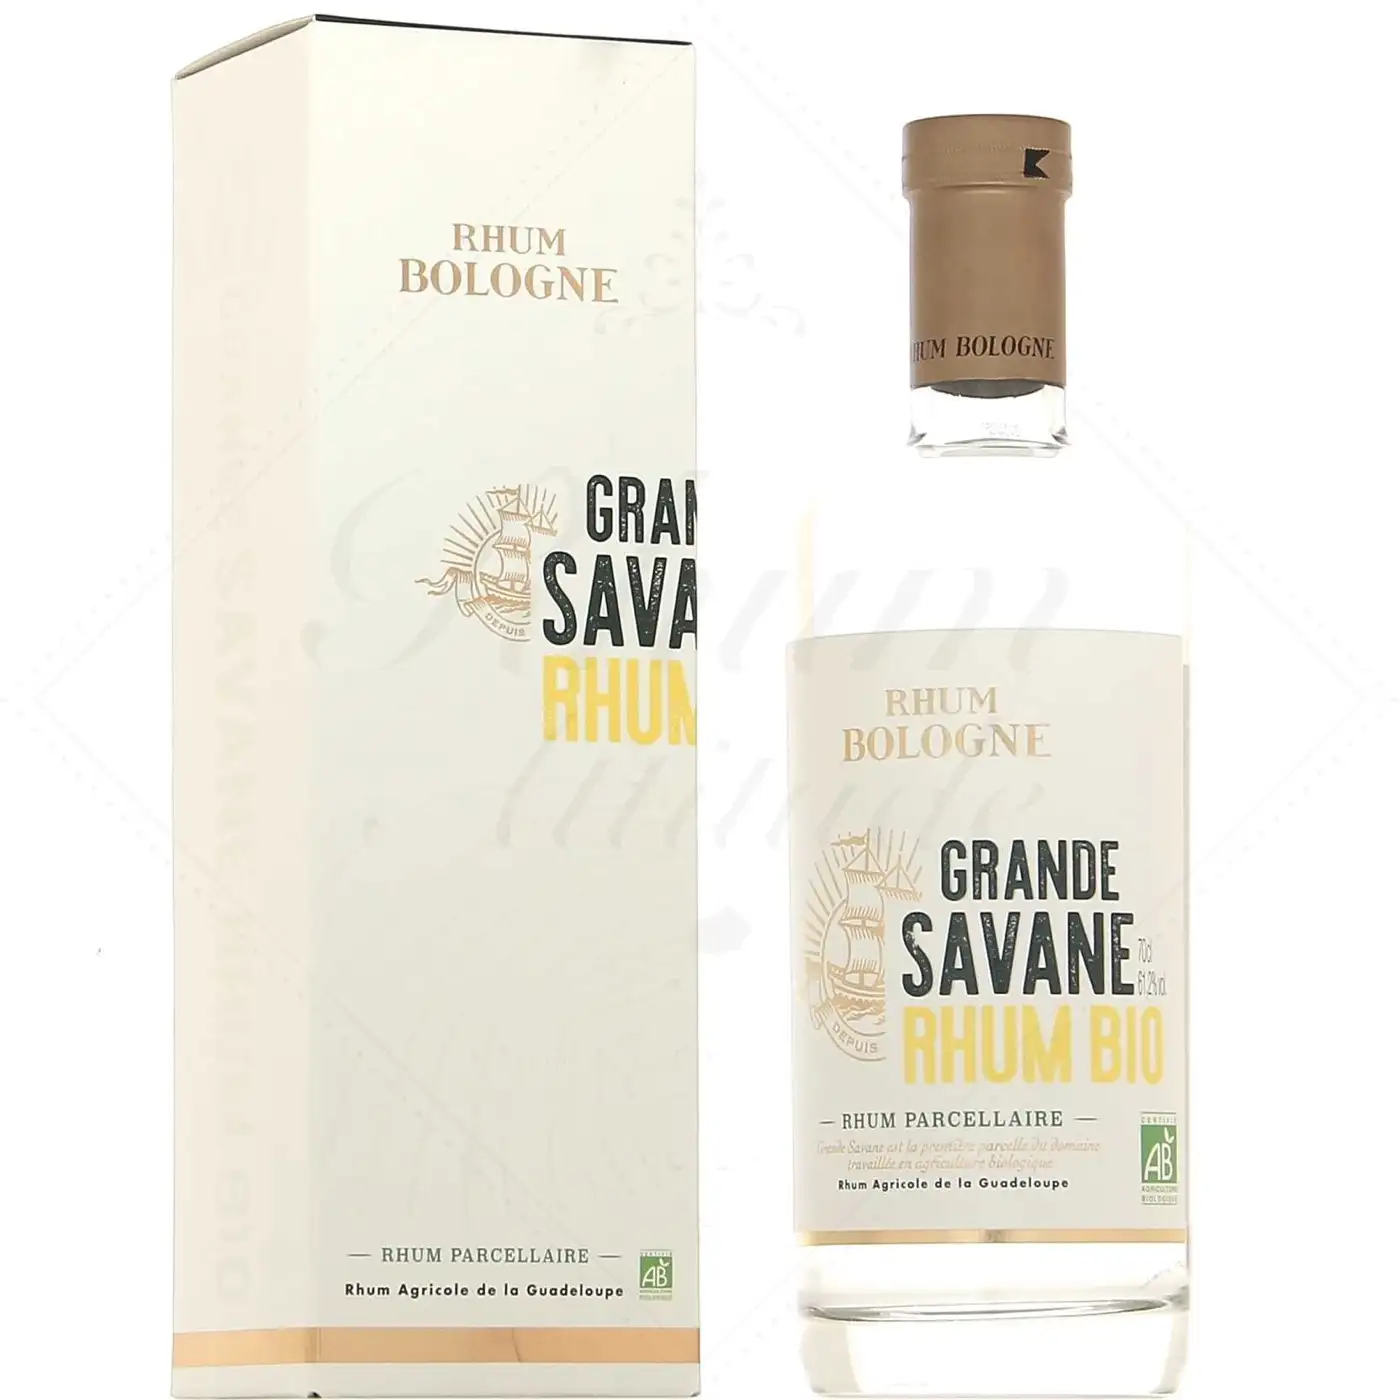 Image of the front of the bottle of the rum Grande Savane Rhum Bio